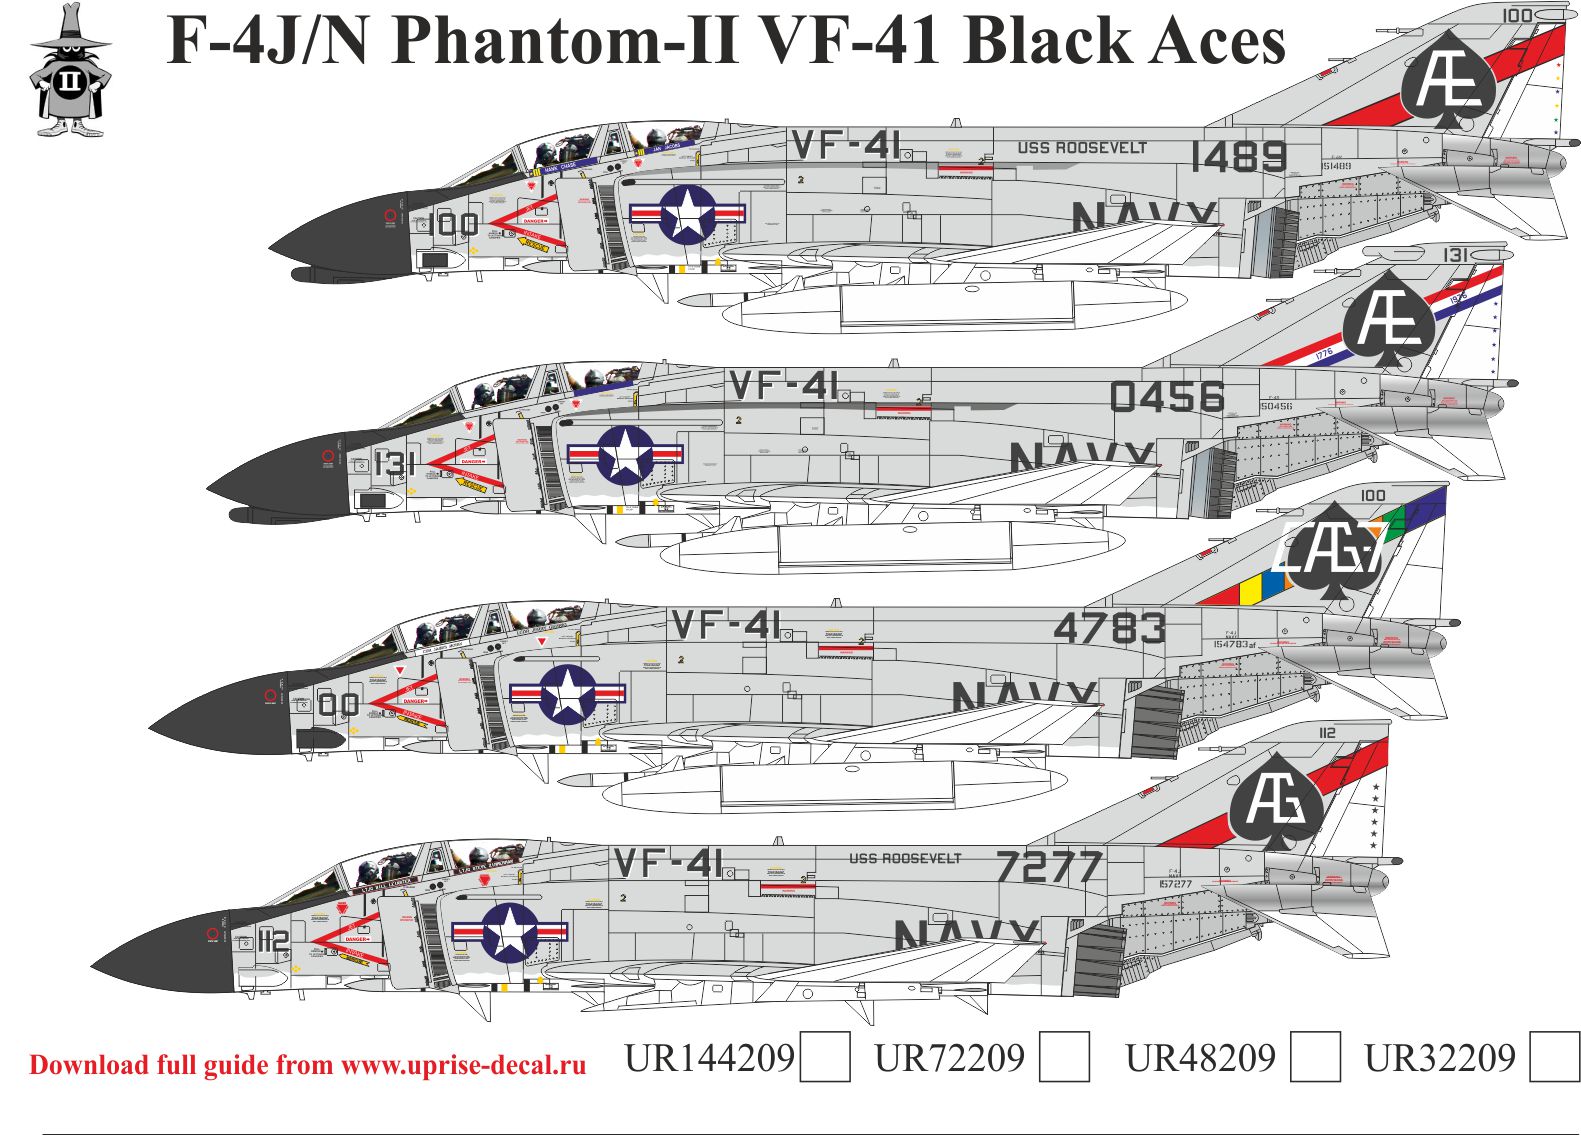 UR48209  декали  F-4N/J Phantom-II VF-41  (1:48)